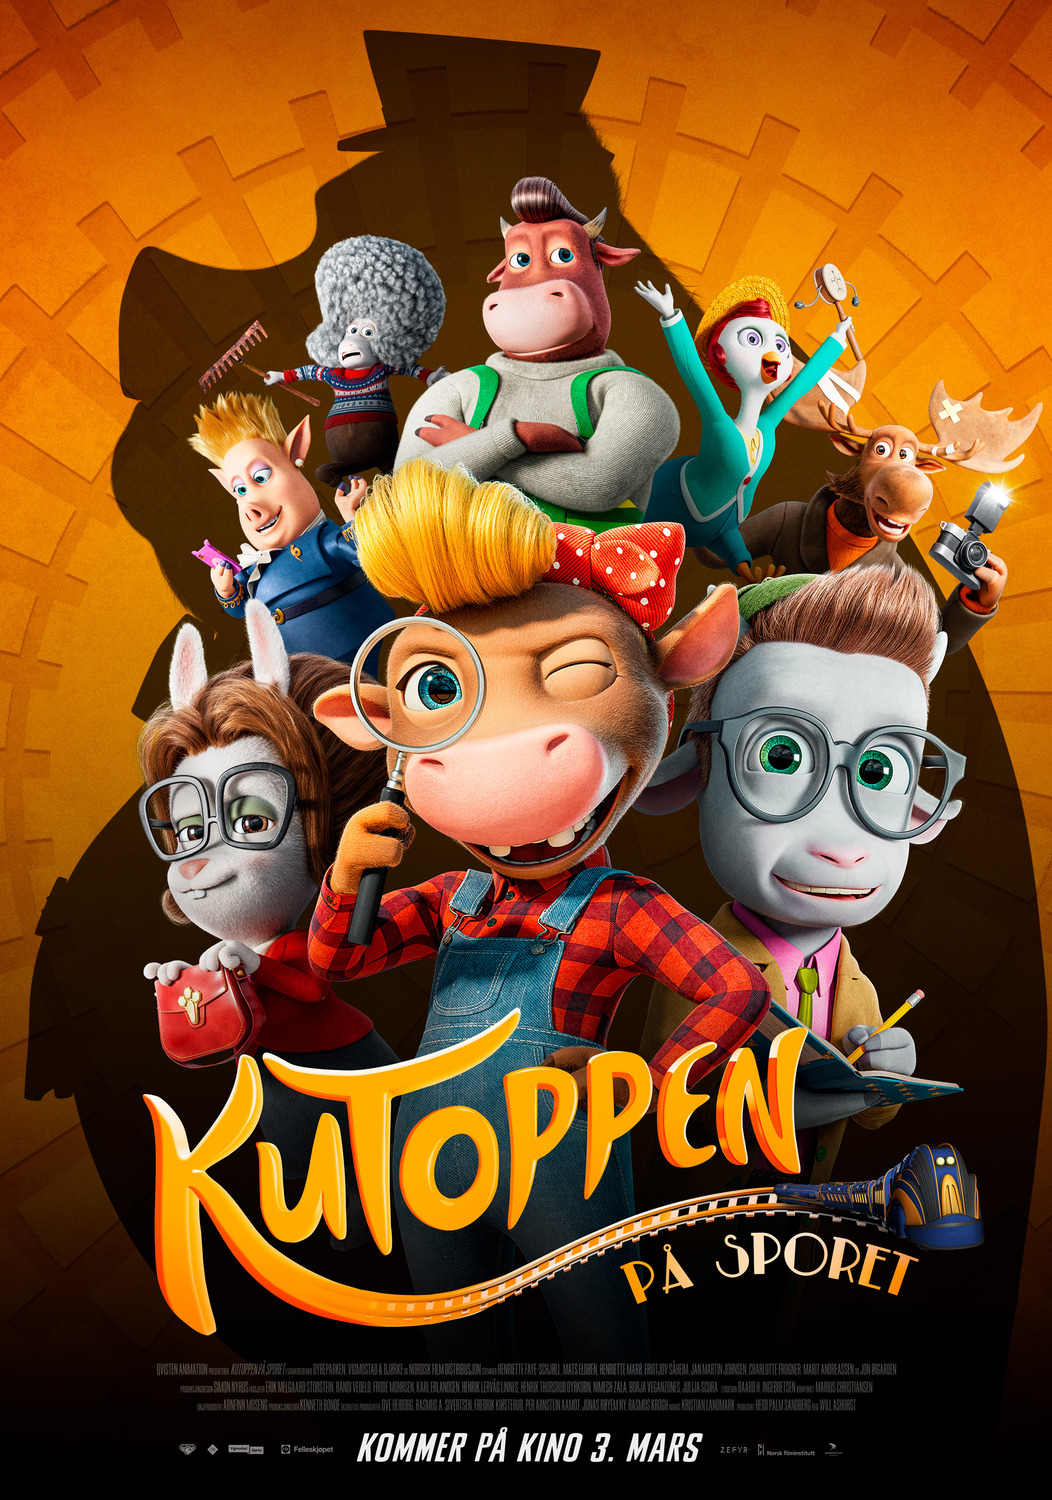 Extra Large Movie Poster Image for Kutoppen - På sporet 